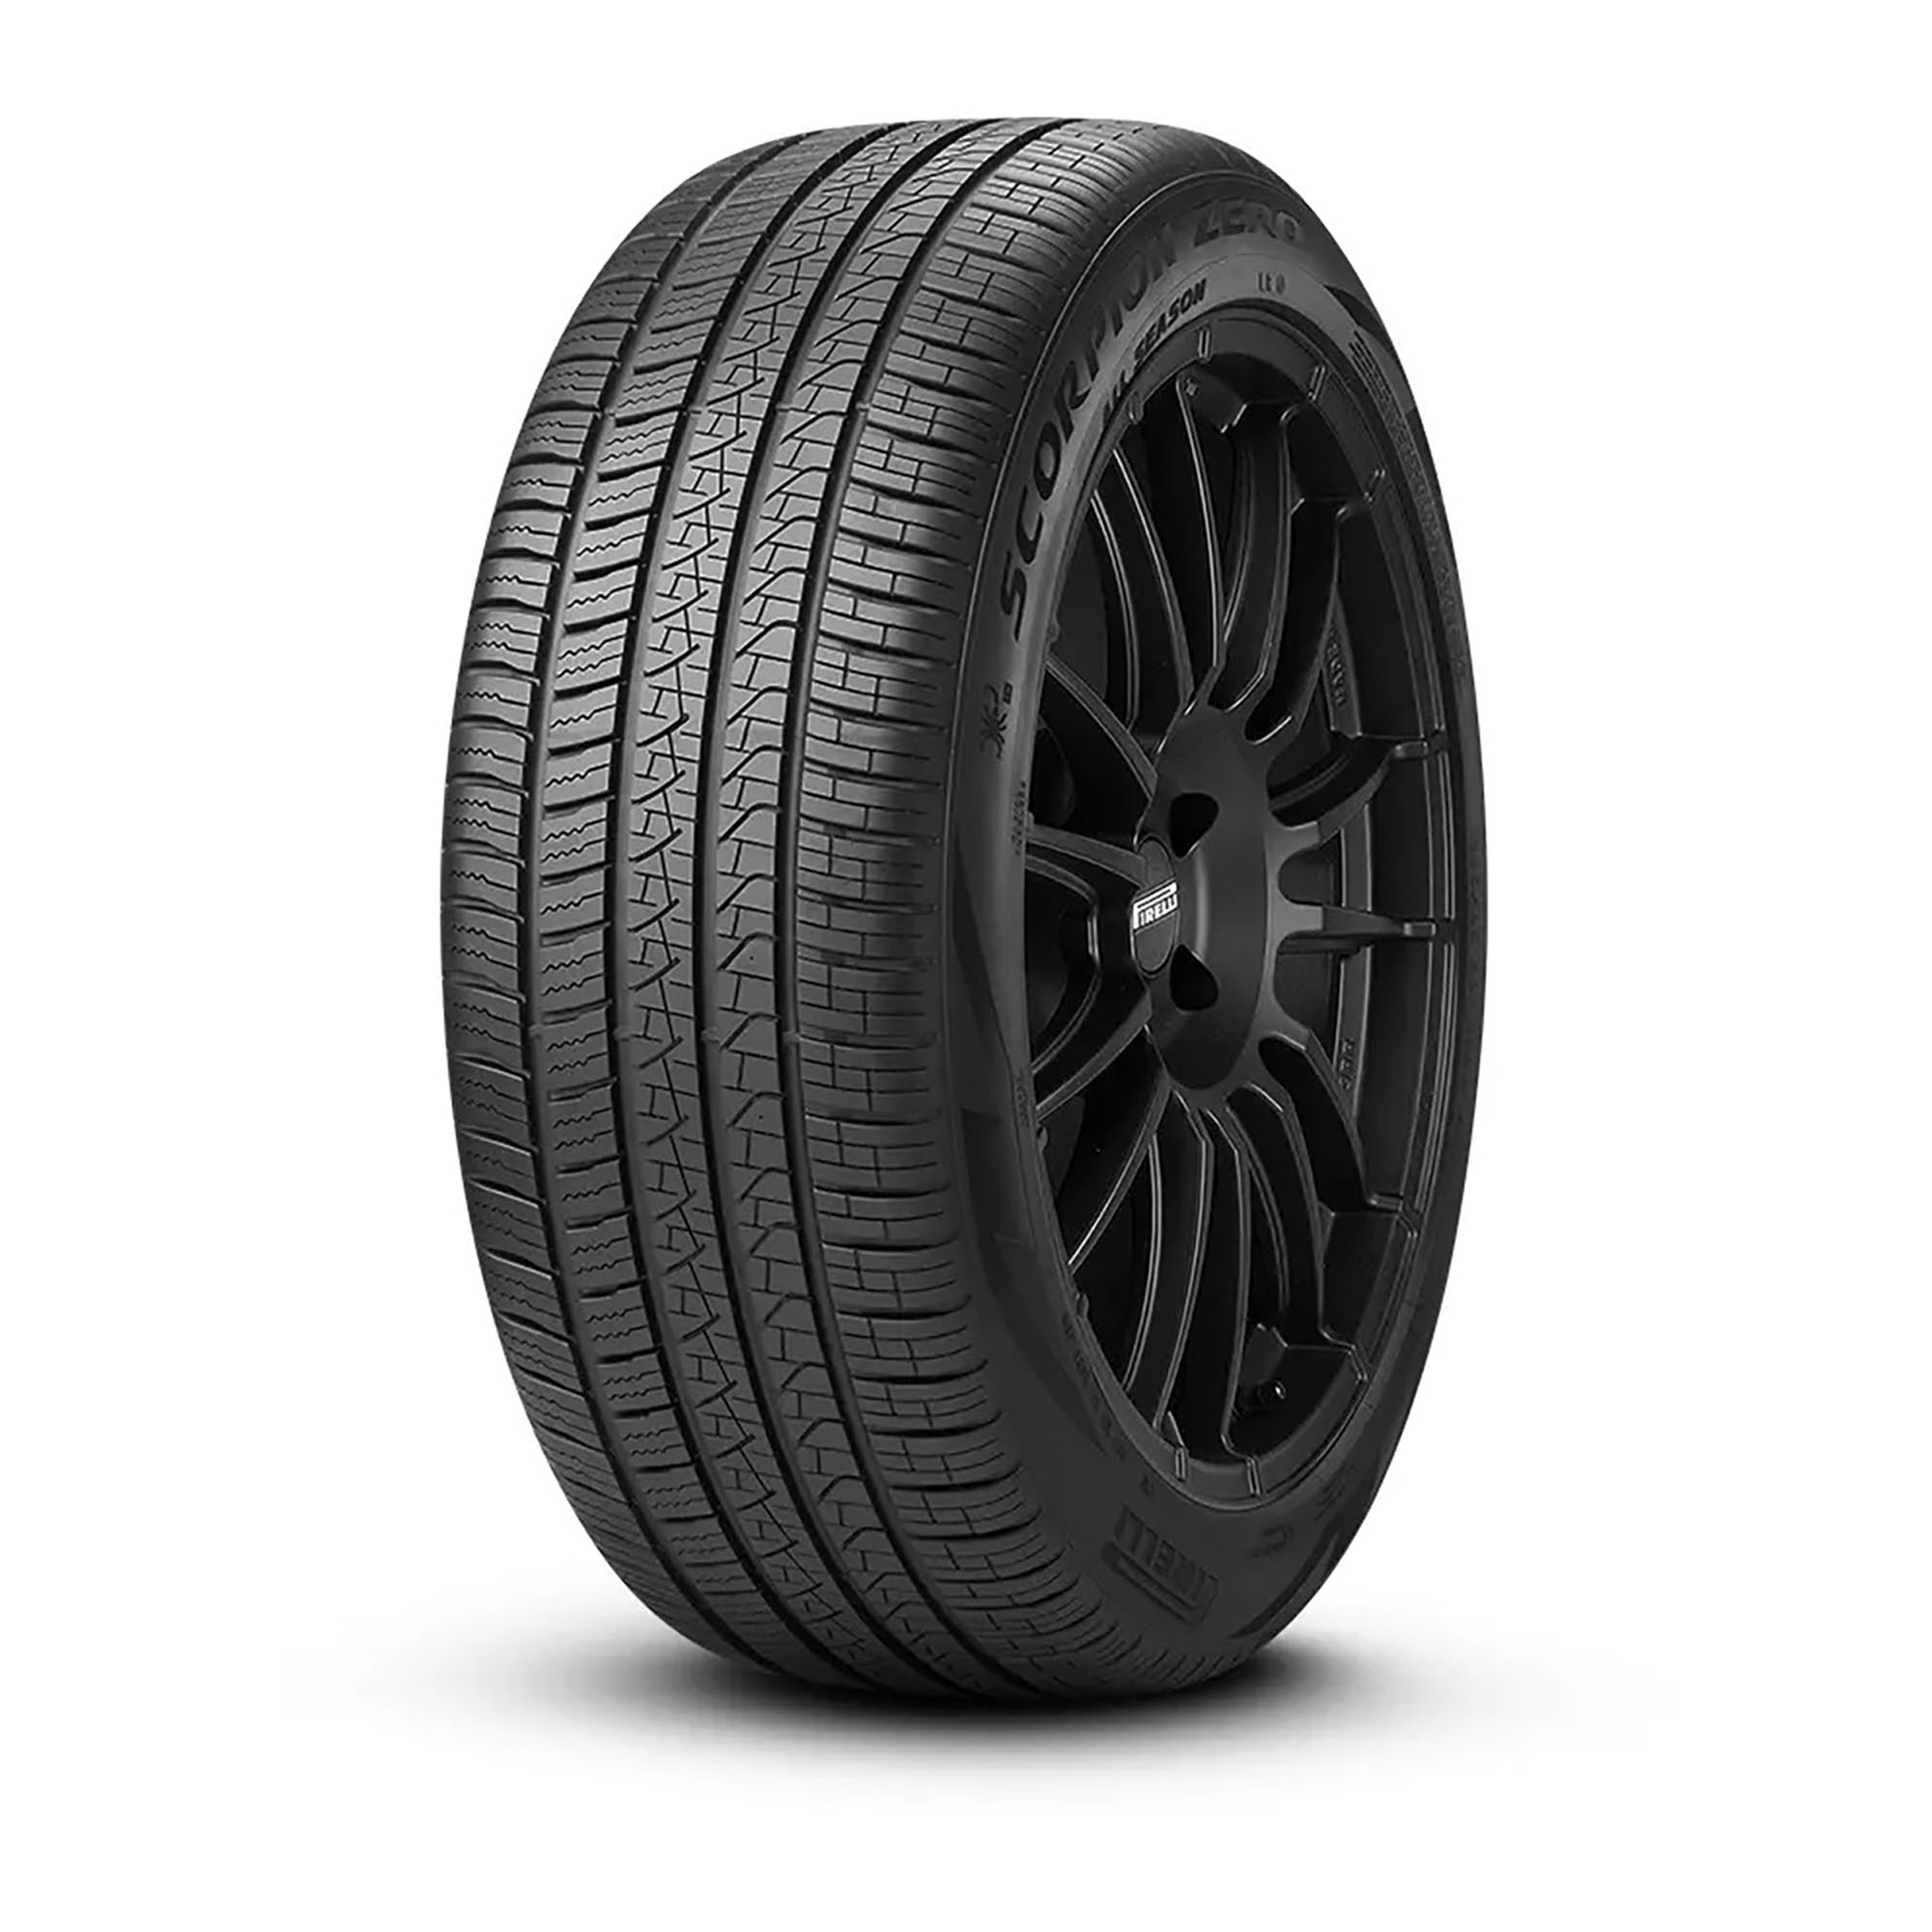 | eBay Scorpion Season Zero 2655519 New 19 55 All - 1 265/55r19 Pirelli Tires 265